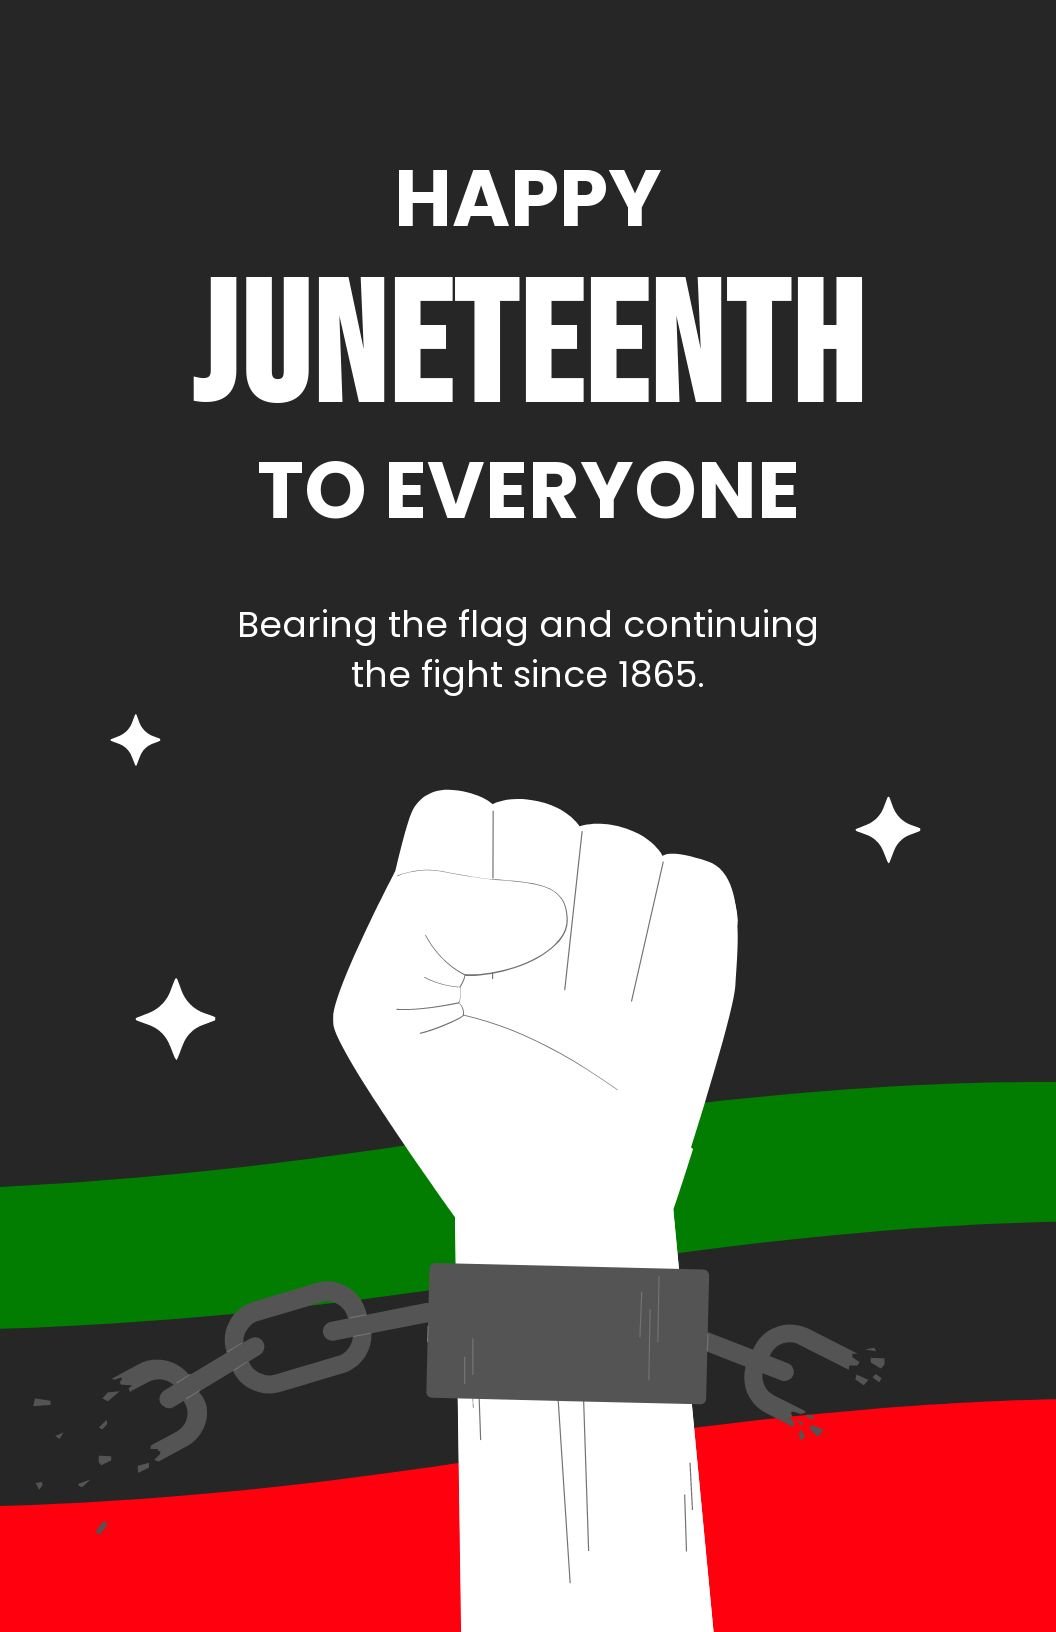 Juneteenth Flag Poster in Word, Google Docs, Illustrator, PSD, Apple Pages, Publisher, JPG